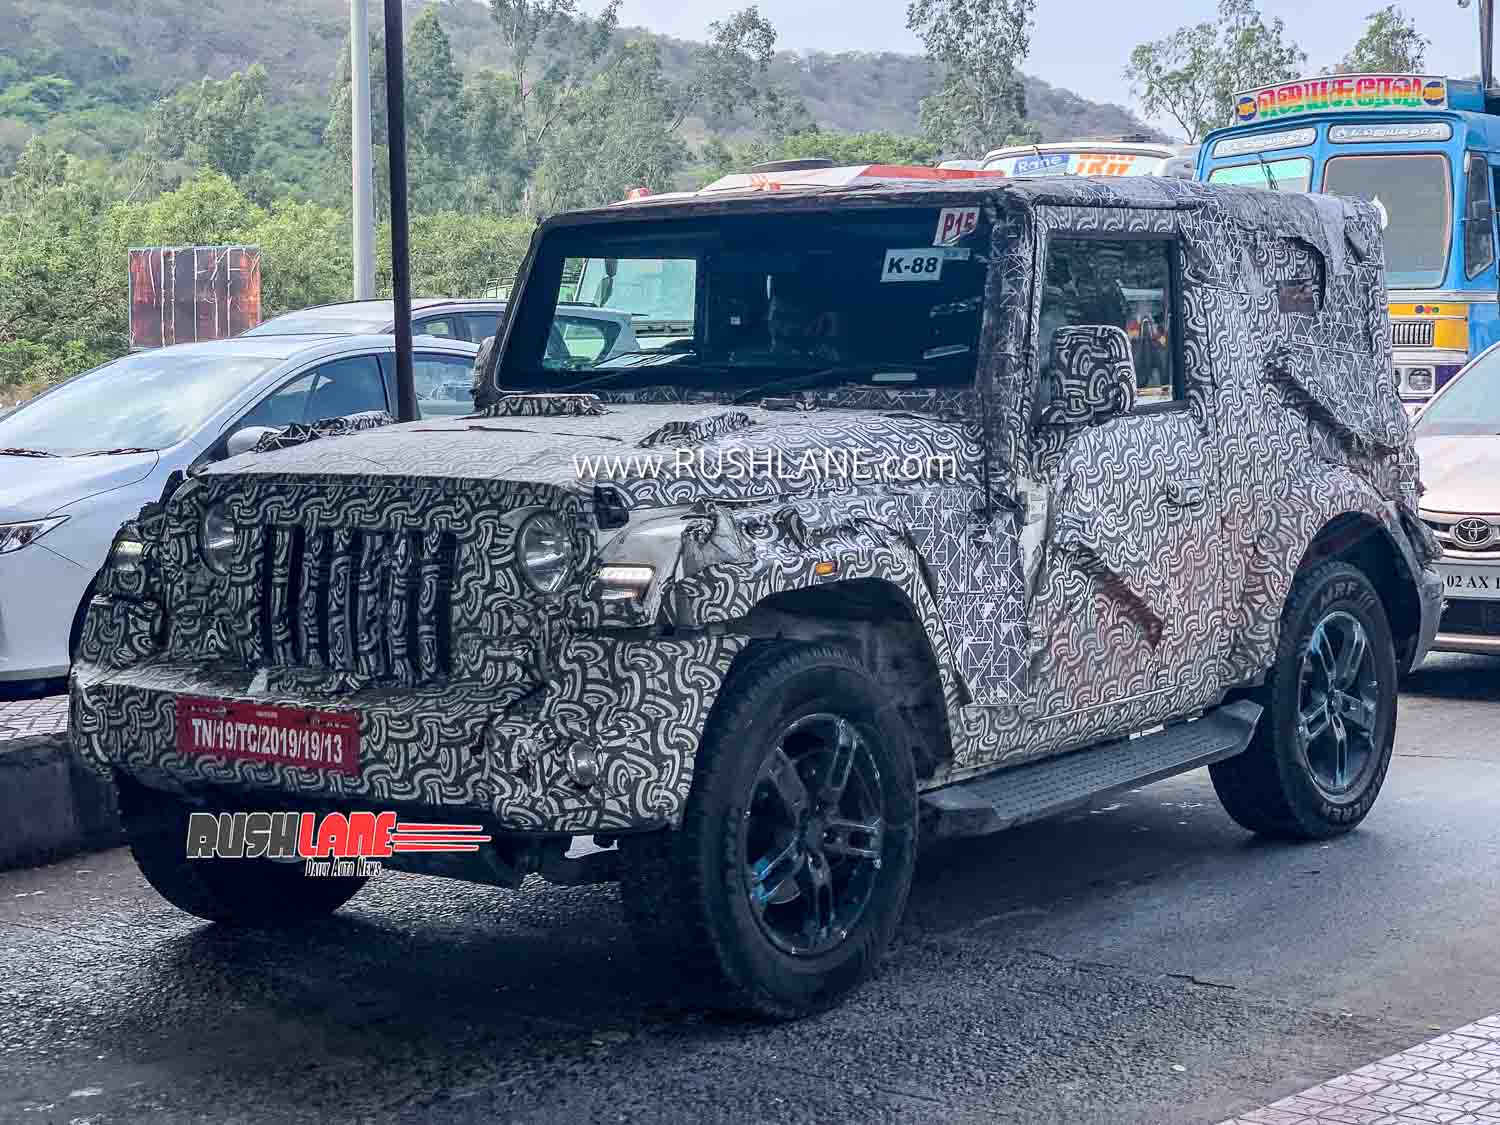 Thar Jeep New Model 2020